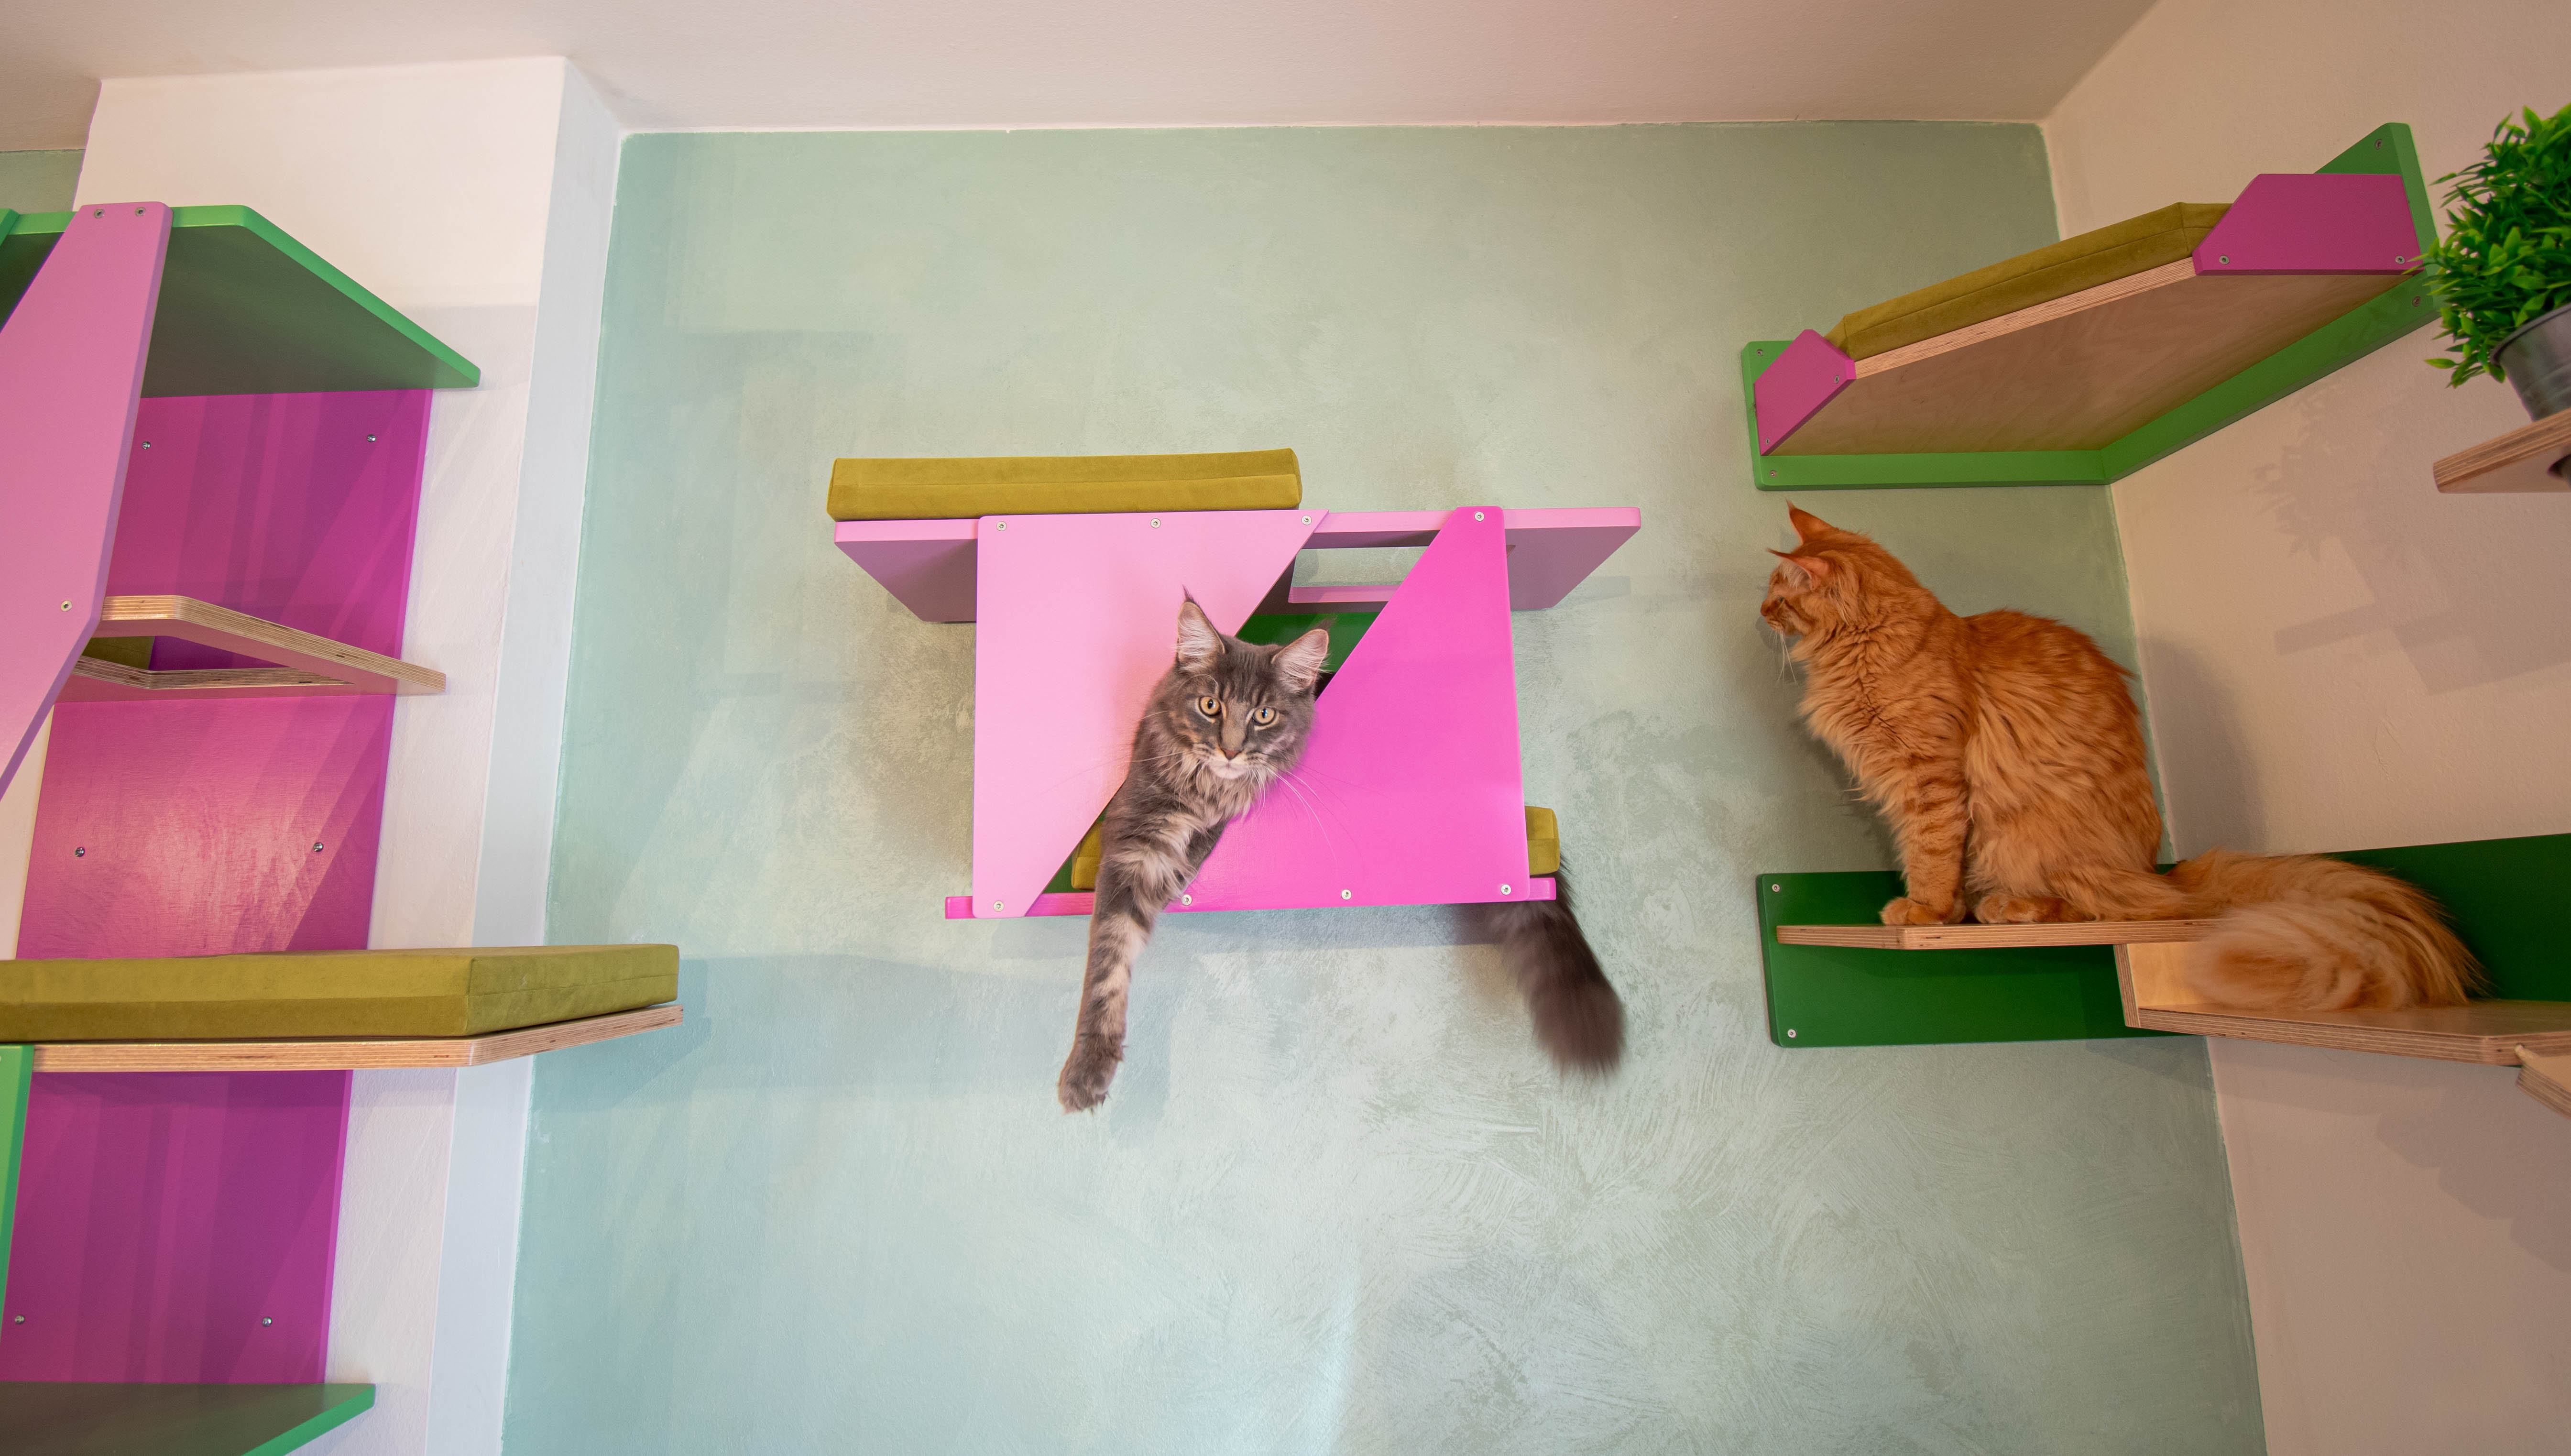 Big Cat Wall Shelf Bed Box - BigCat Sharp Tunnel Mini - Scratchy Things Premium Pet Furniture